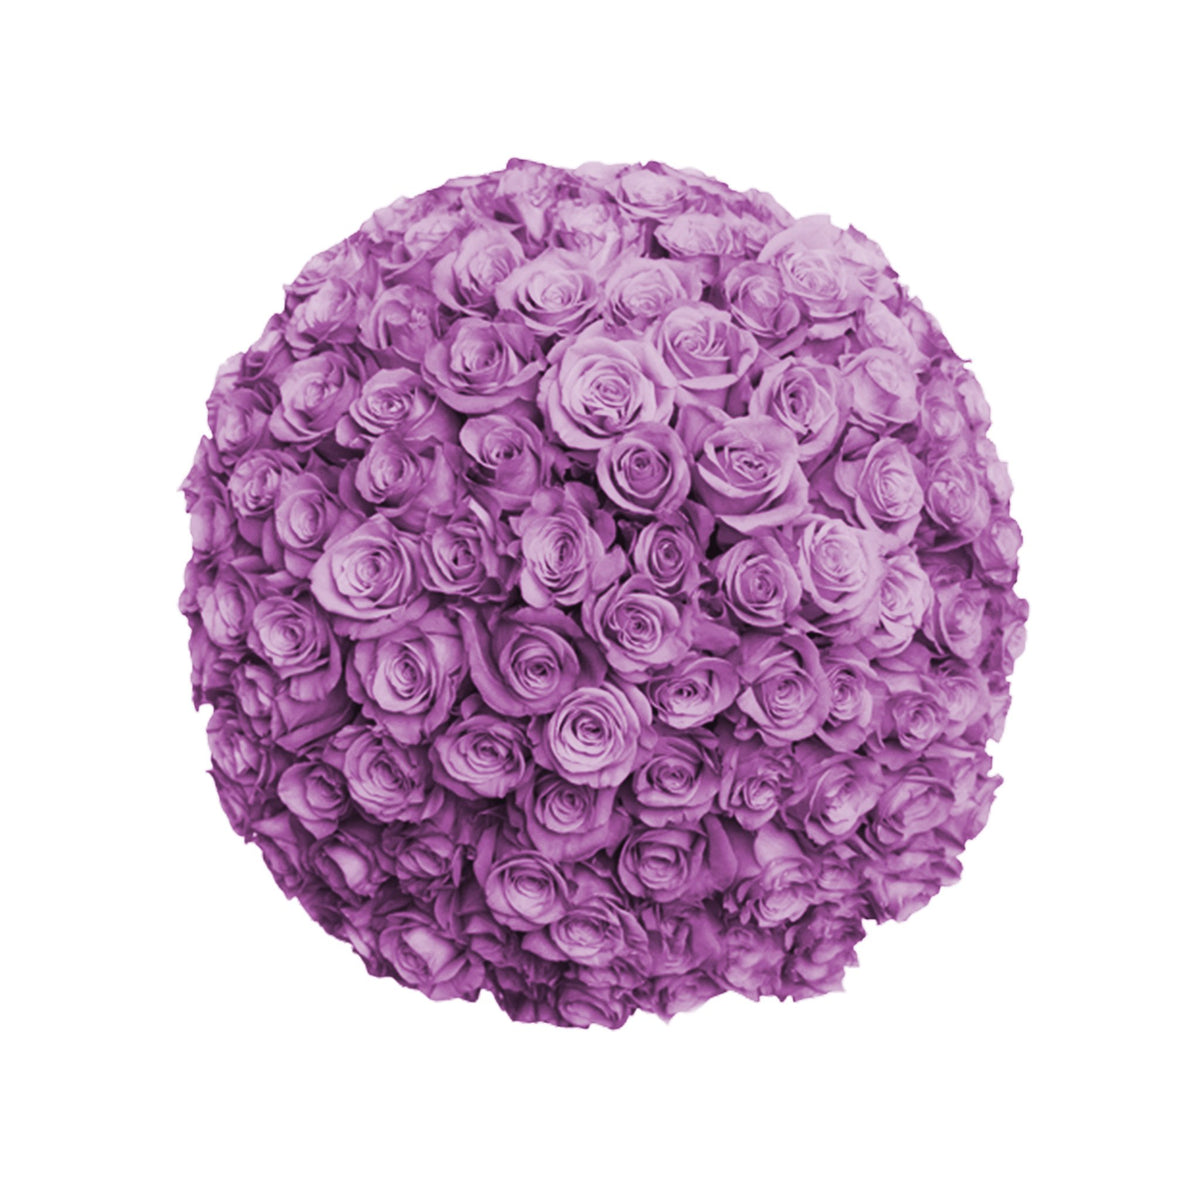 Fresh Roses in a Crystal Vase | Purple - Roses